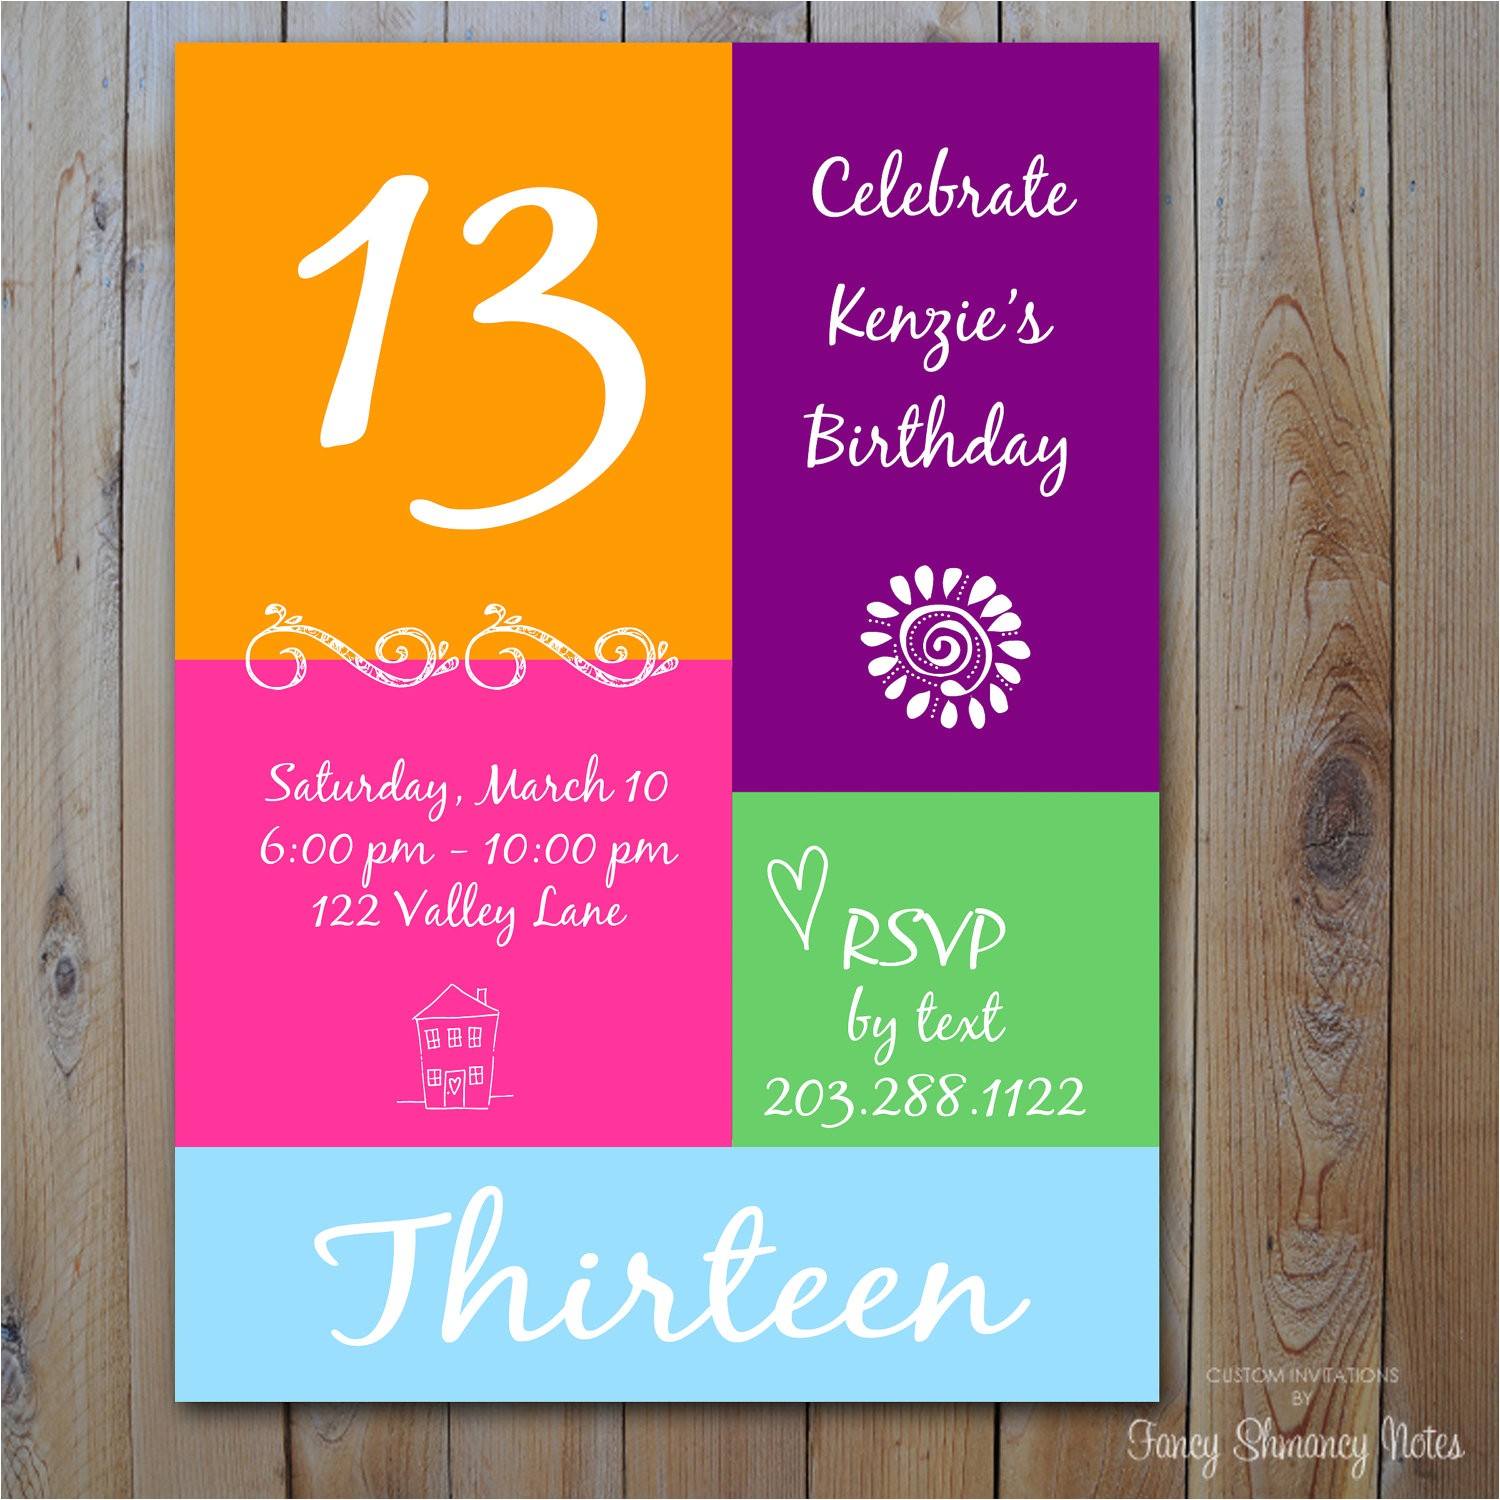 13th birthday party invitation ideas